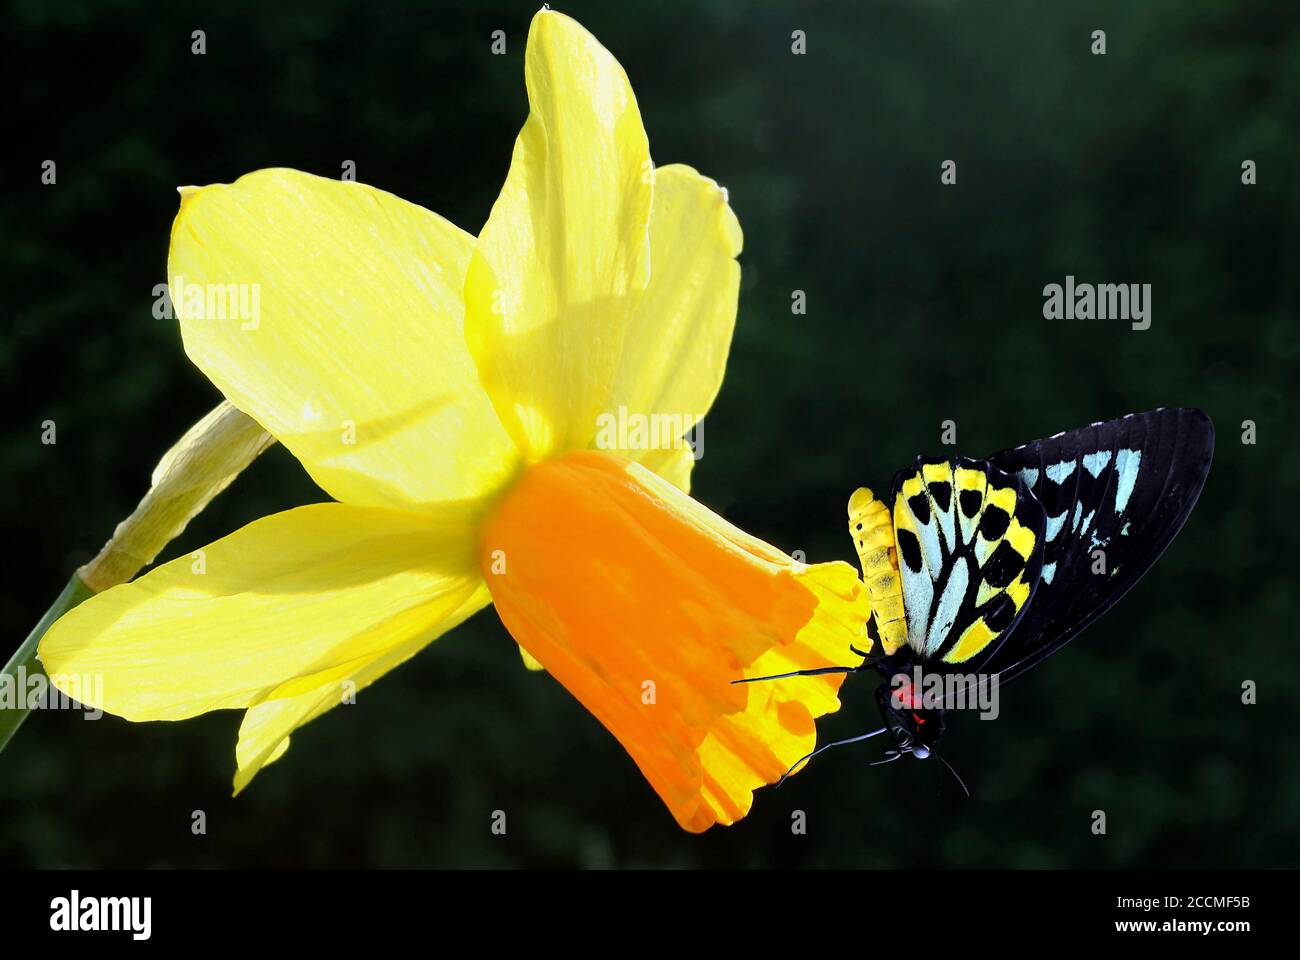 Cairns Birdwing Lateinischer Name Ornithoptera euphorion auf einem Narzissen Latein Name fNarcissus Tete-a-Tete Blume Stockfoto